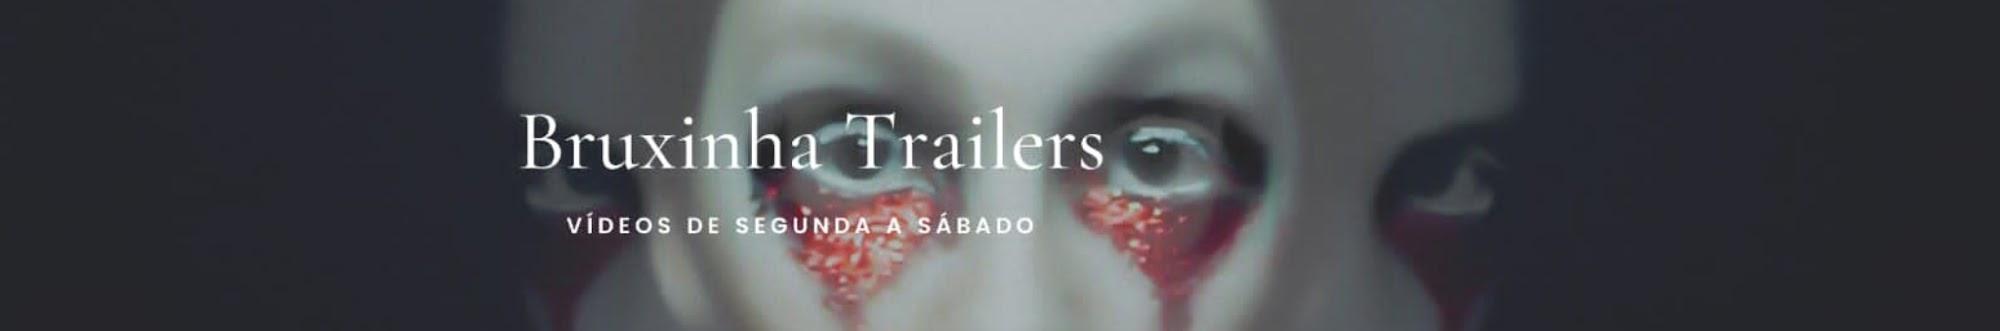 Bruxinha Trailers